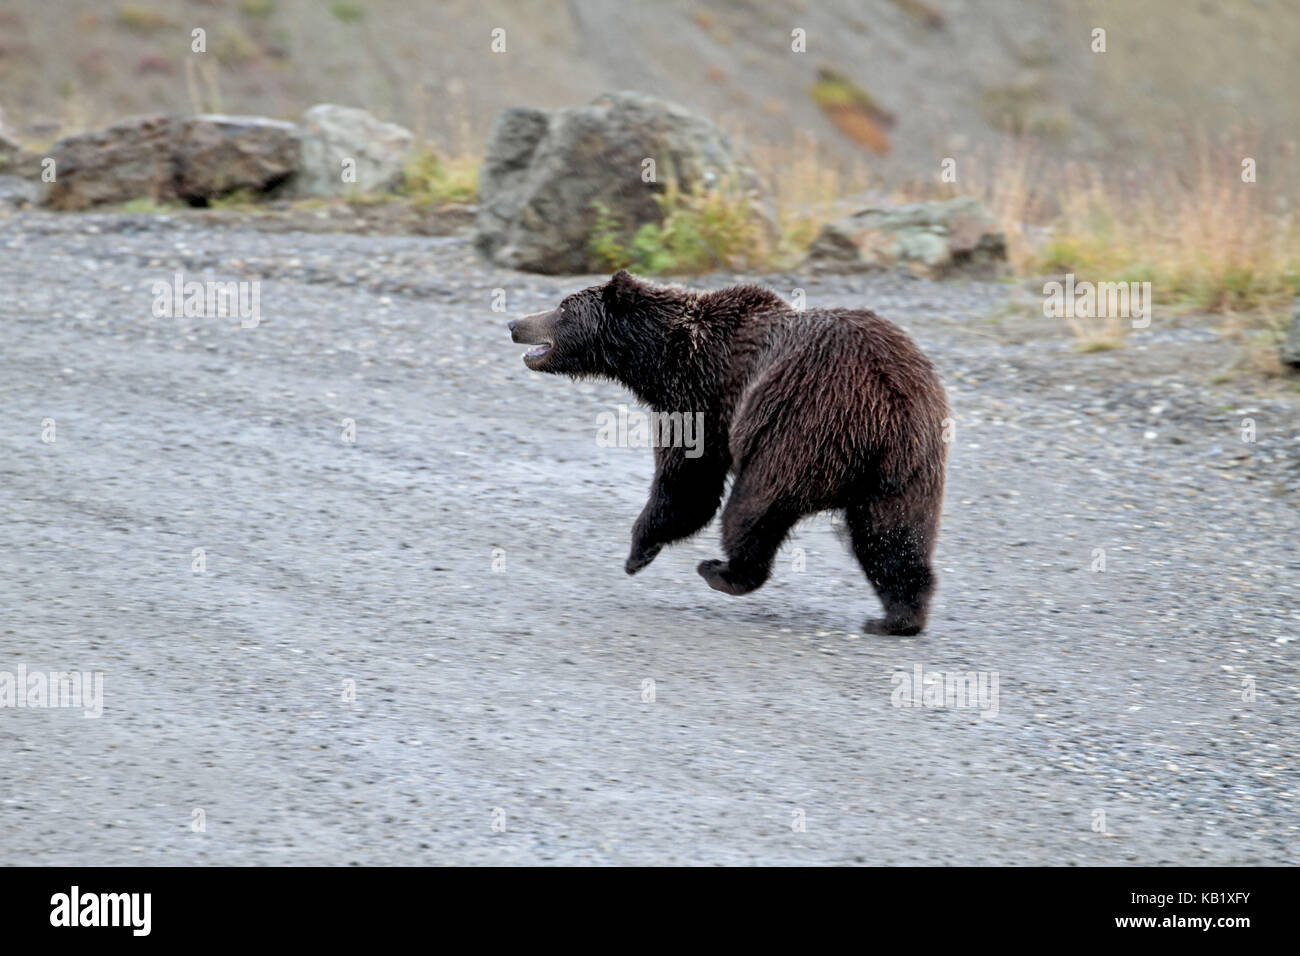 North America, the USA, Alaska, Denali national park, brown bear, Grizzly, Ursus arctos, park Road, Stock Photo